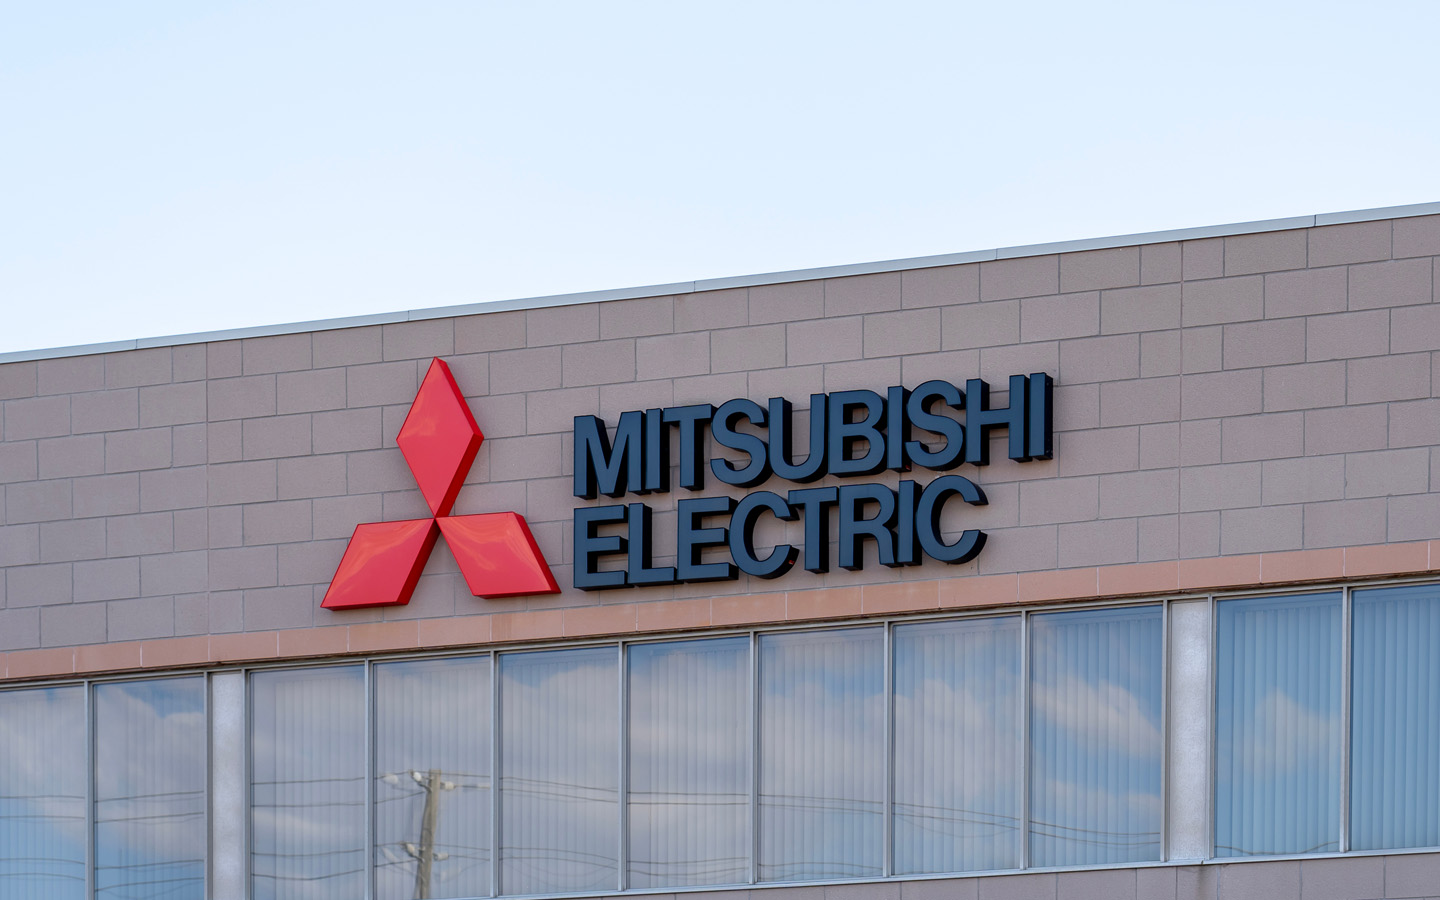 mitsubishi electric building poster